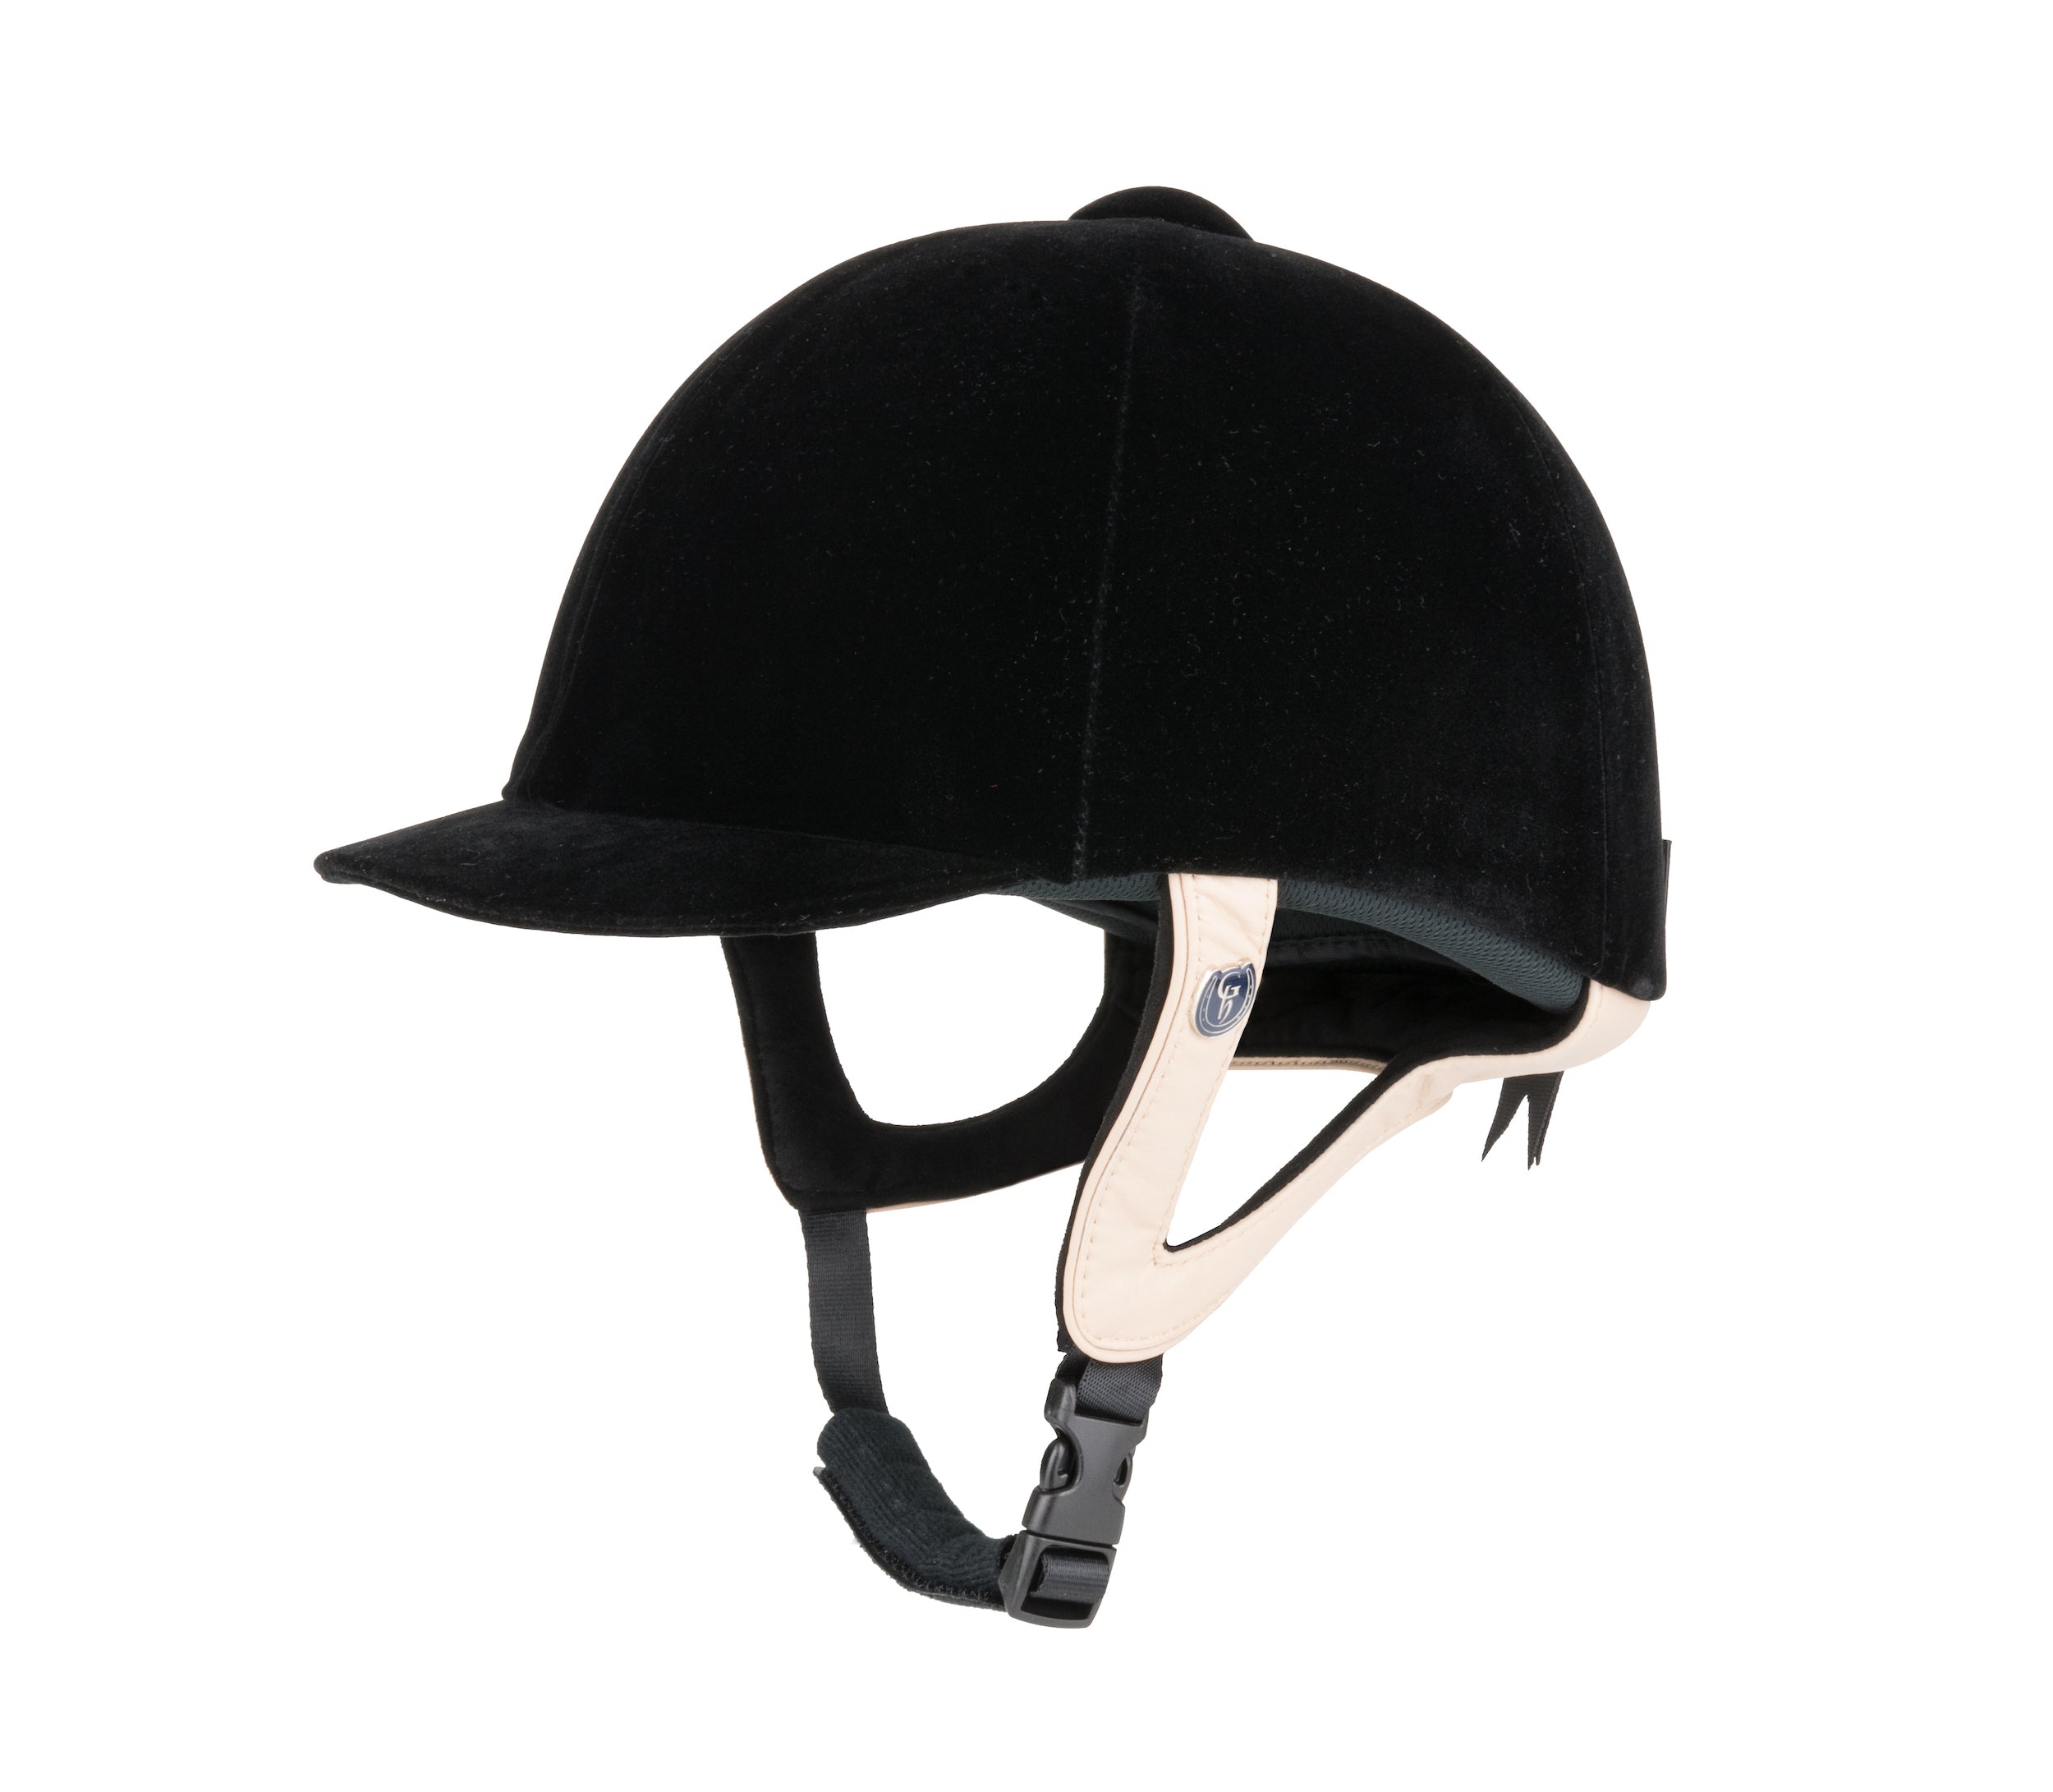 GH Jeunesse Velvet Riding Hat - Black